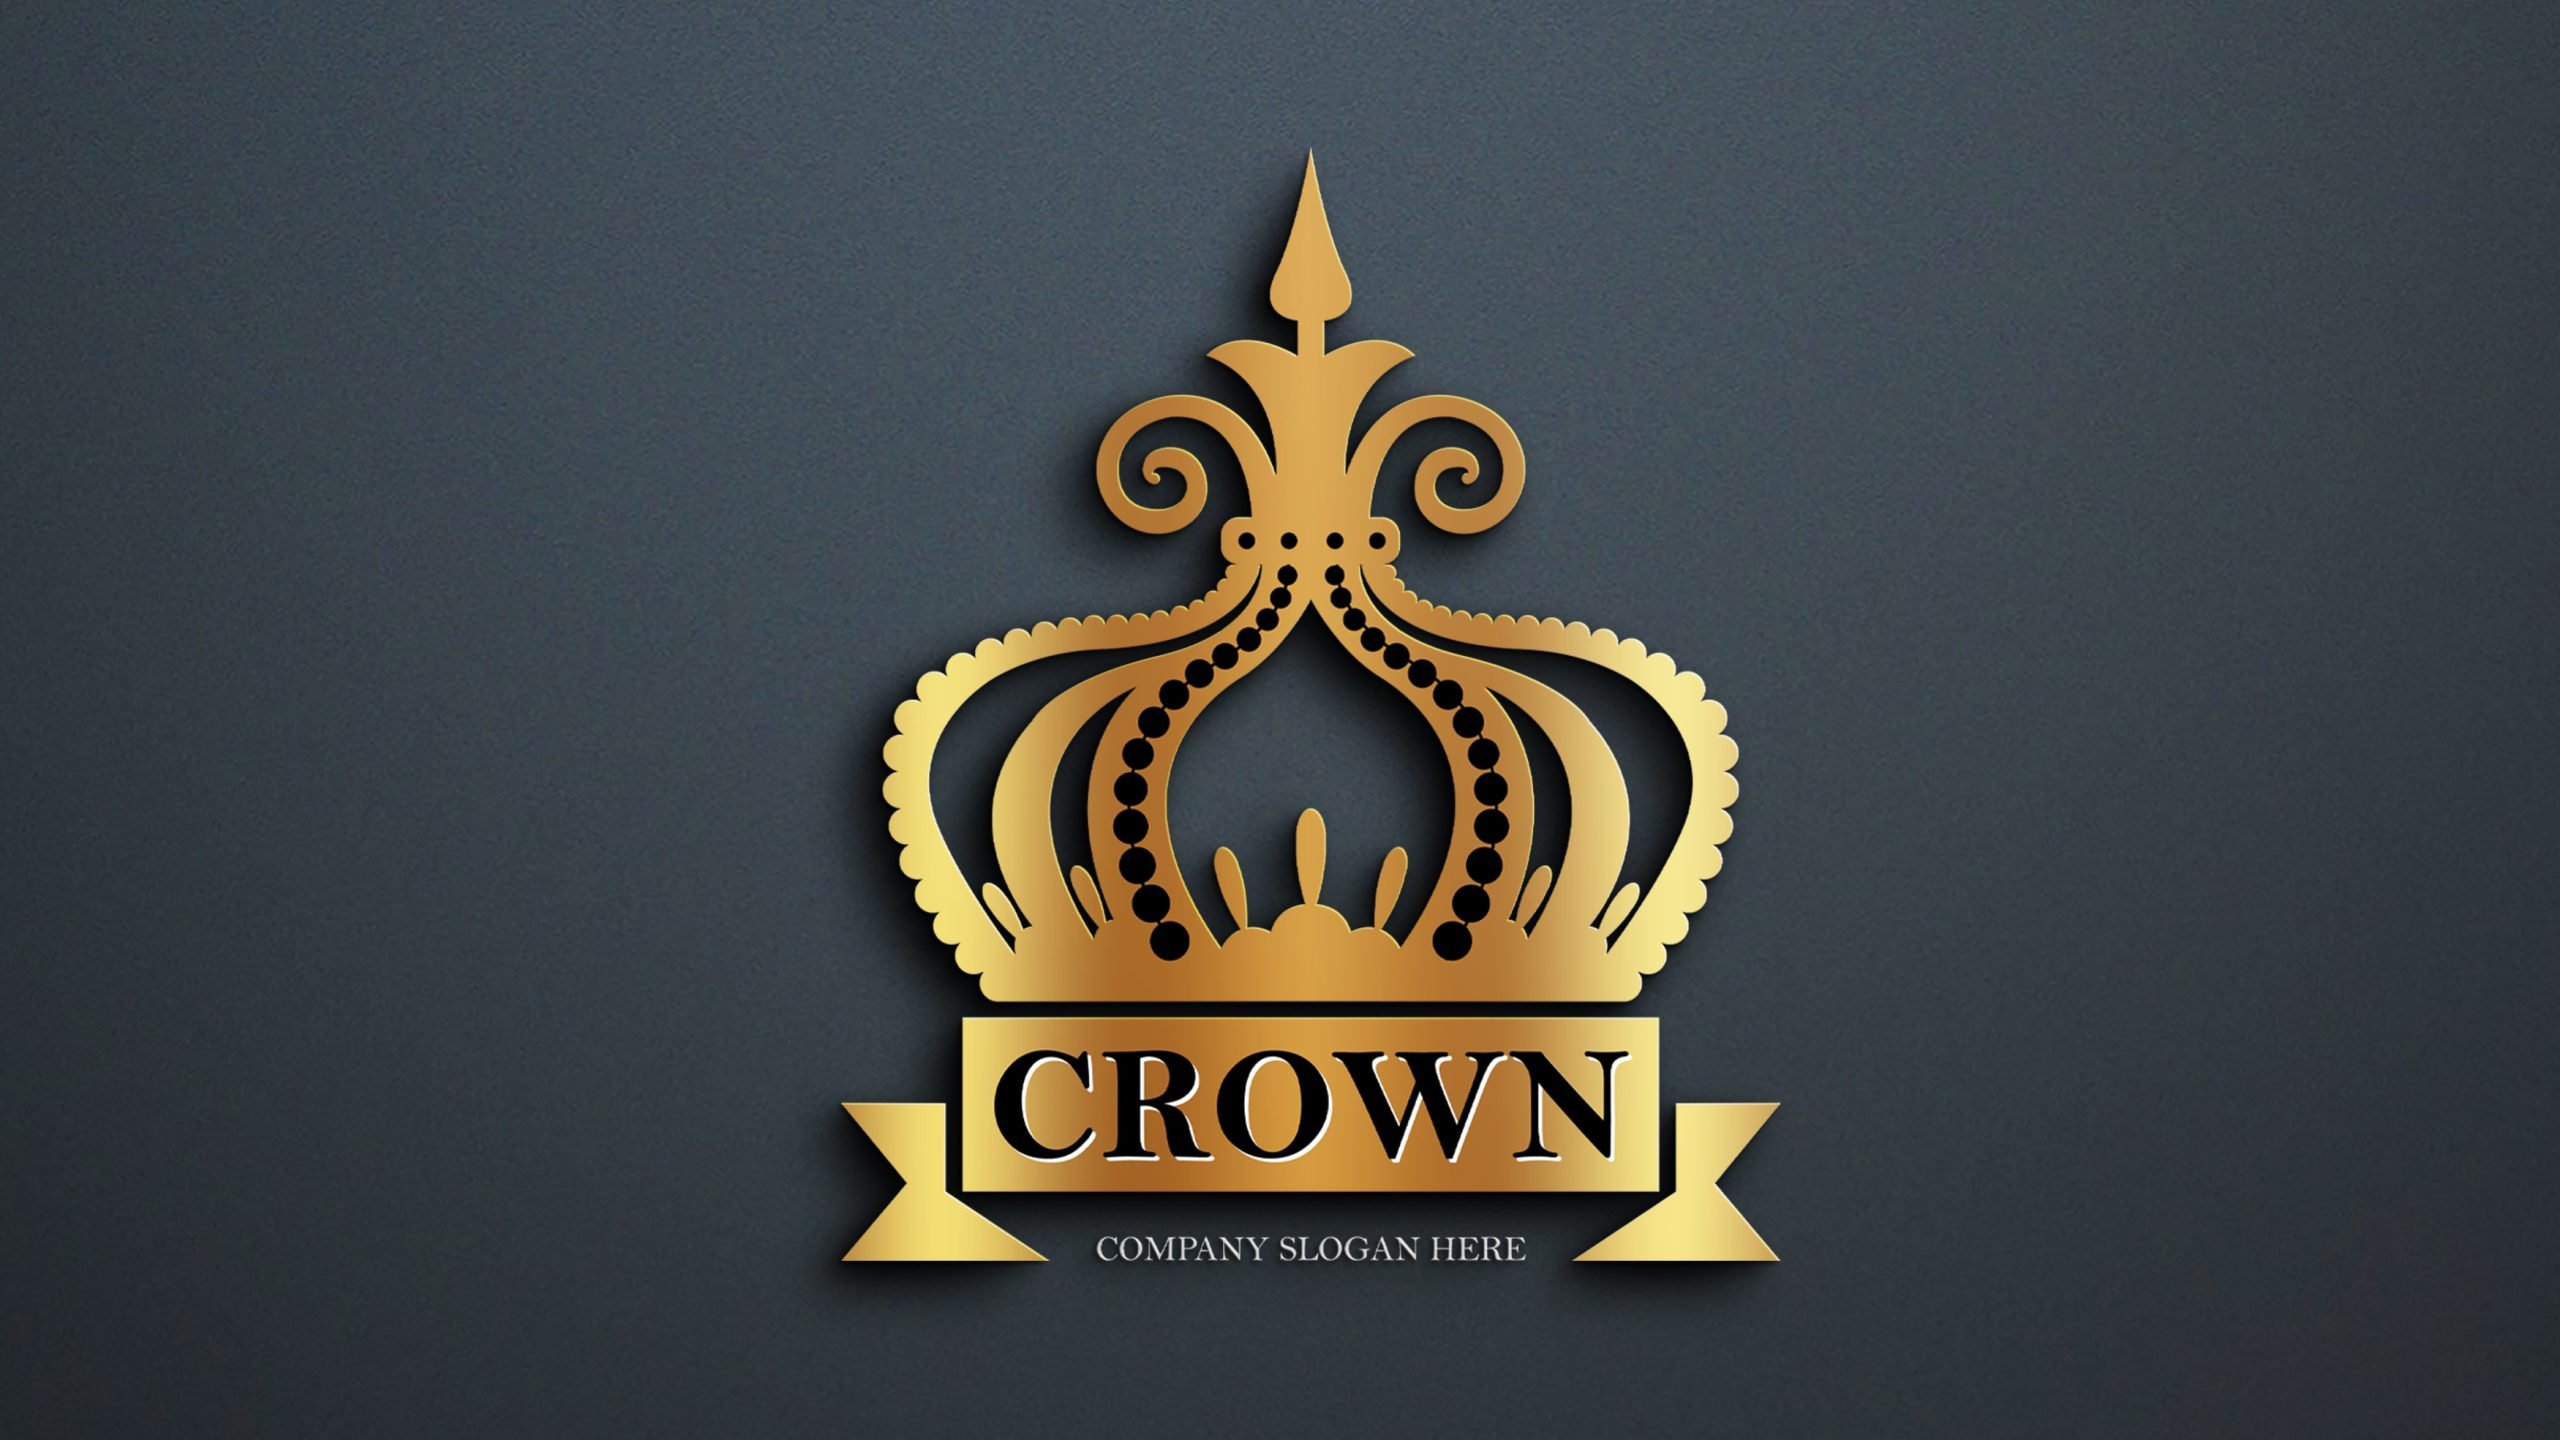 crown logo photoshop download